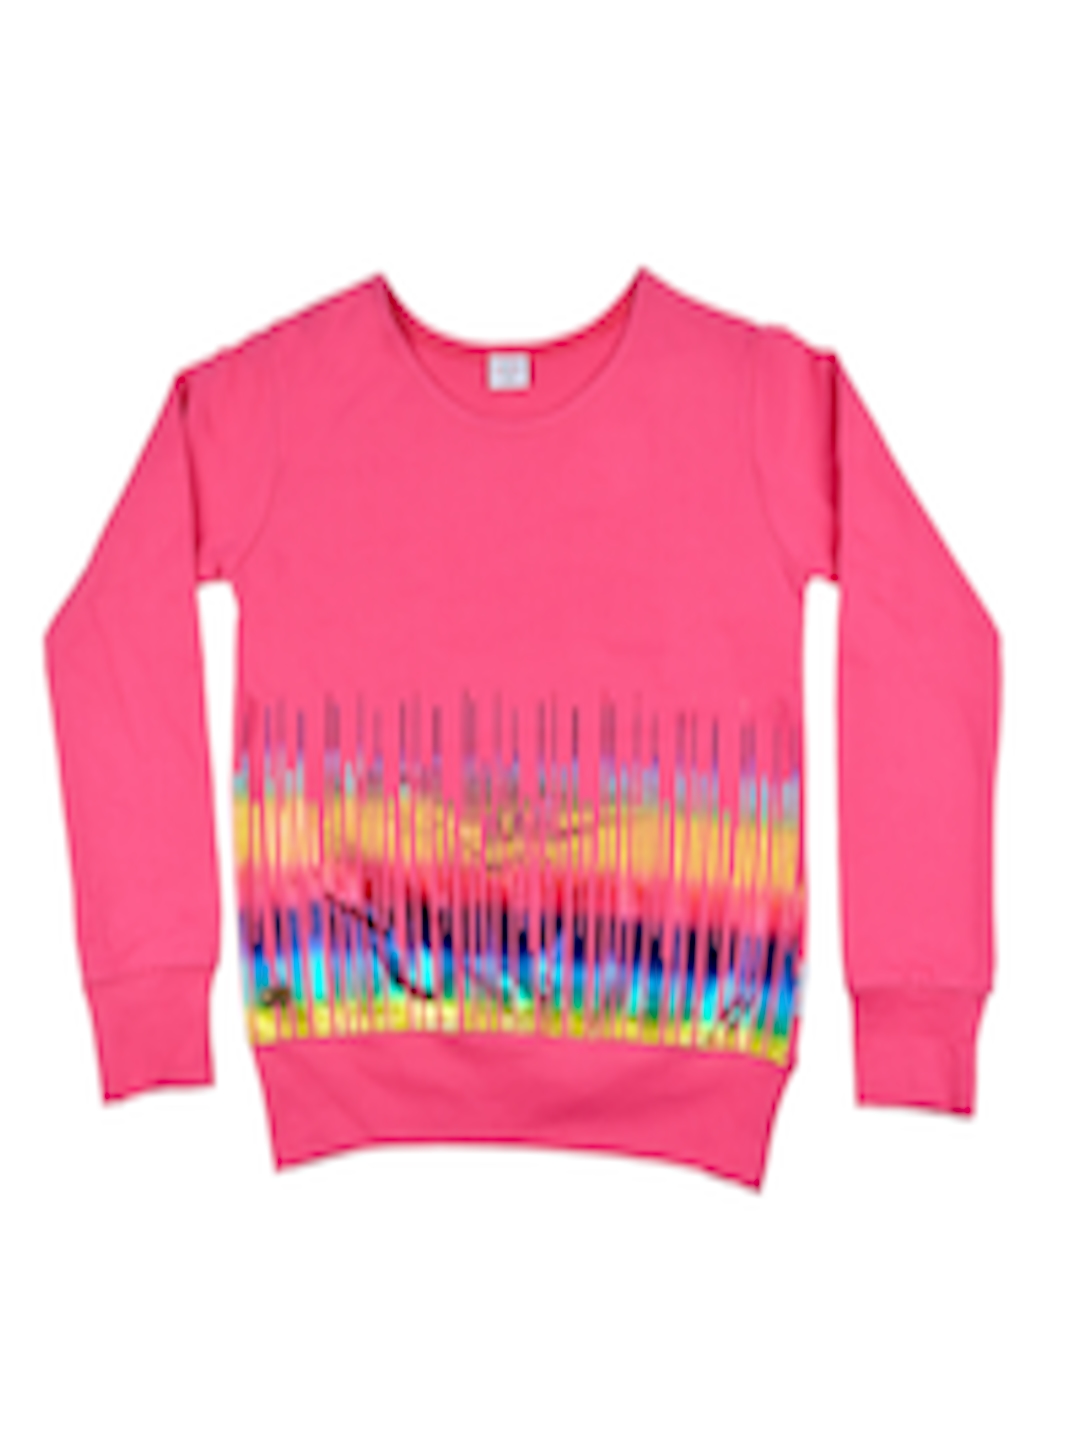 Buy GKIDZ Girls Pink Printed Sweatshirt - Sweatshirts for Girls 1686517 ...